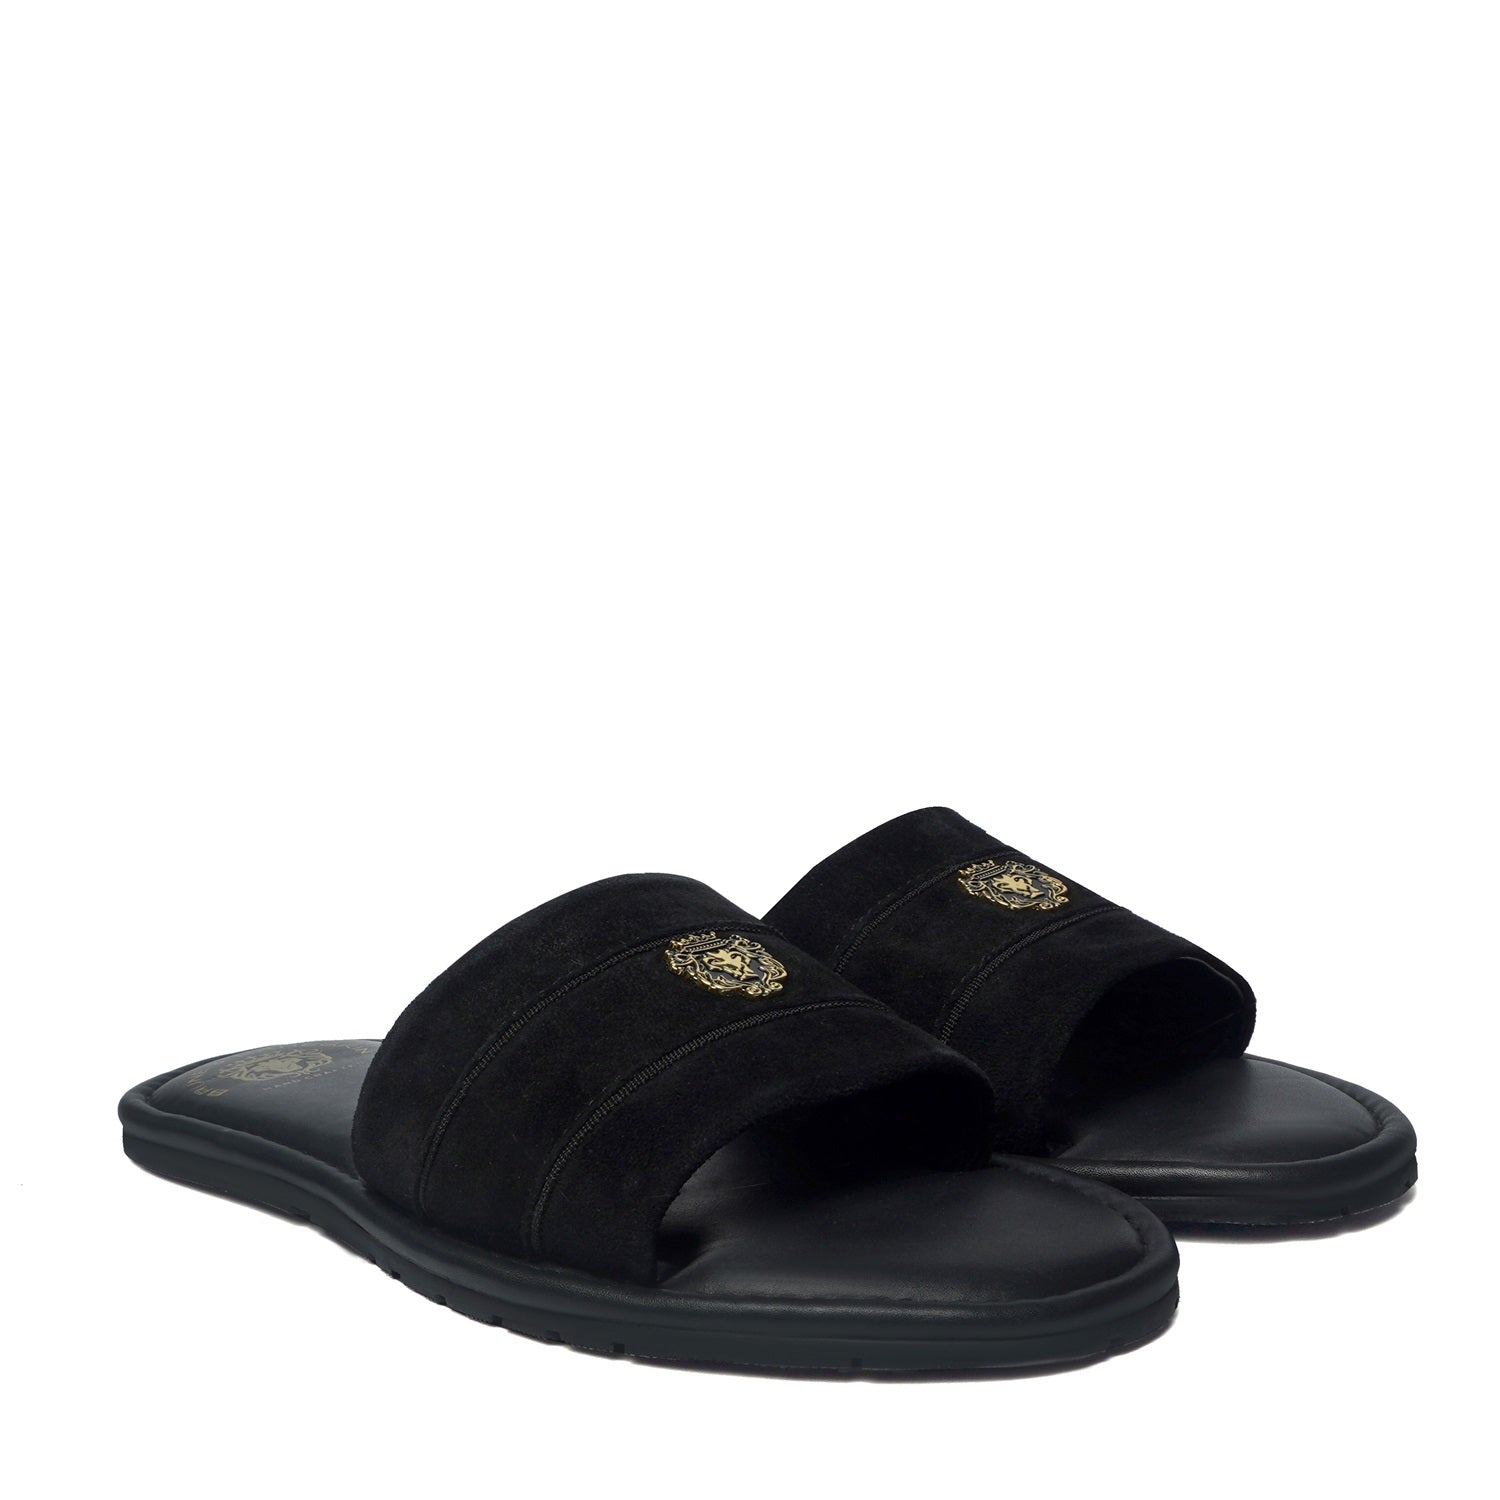 Black Suede Strap Leather Slide-in Slippers by BRUNE & BARESKIN